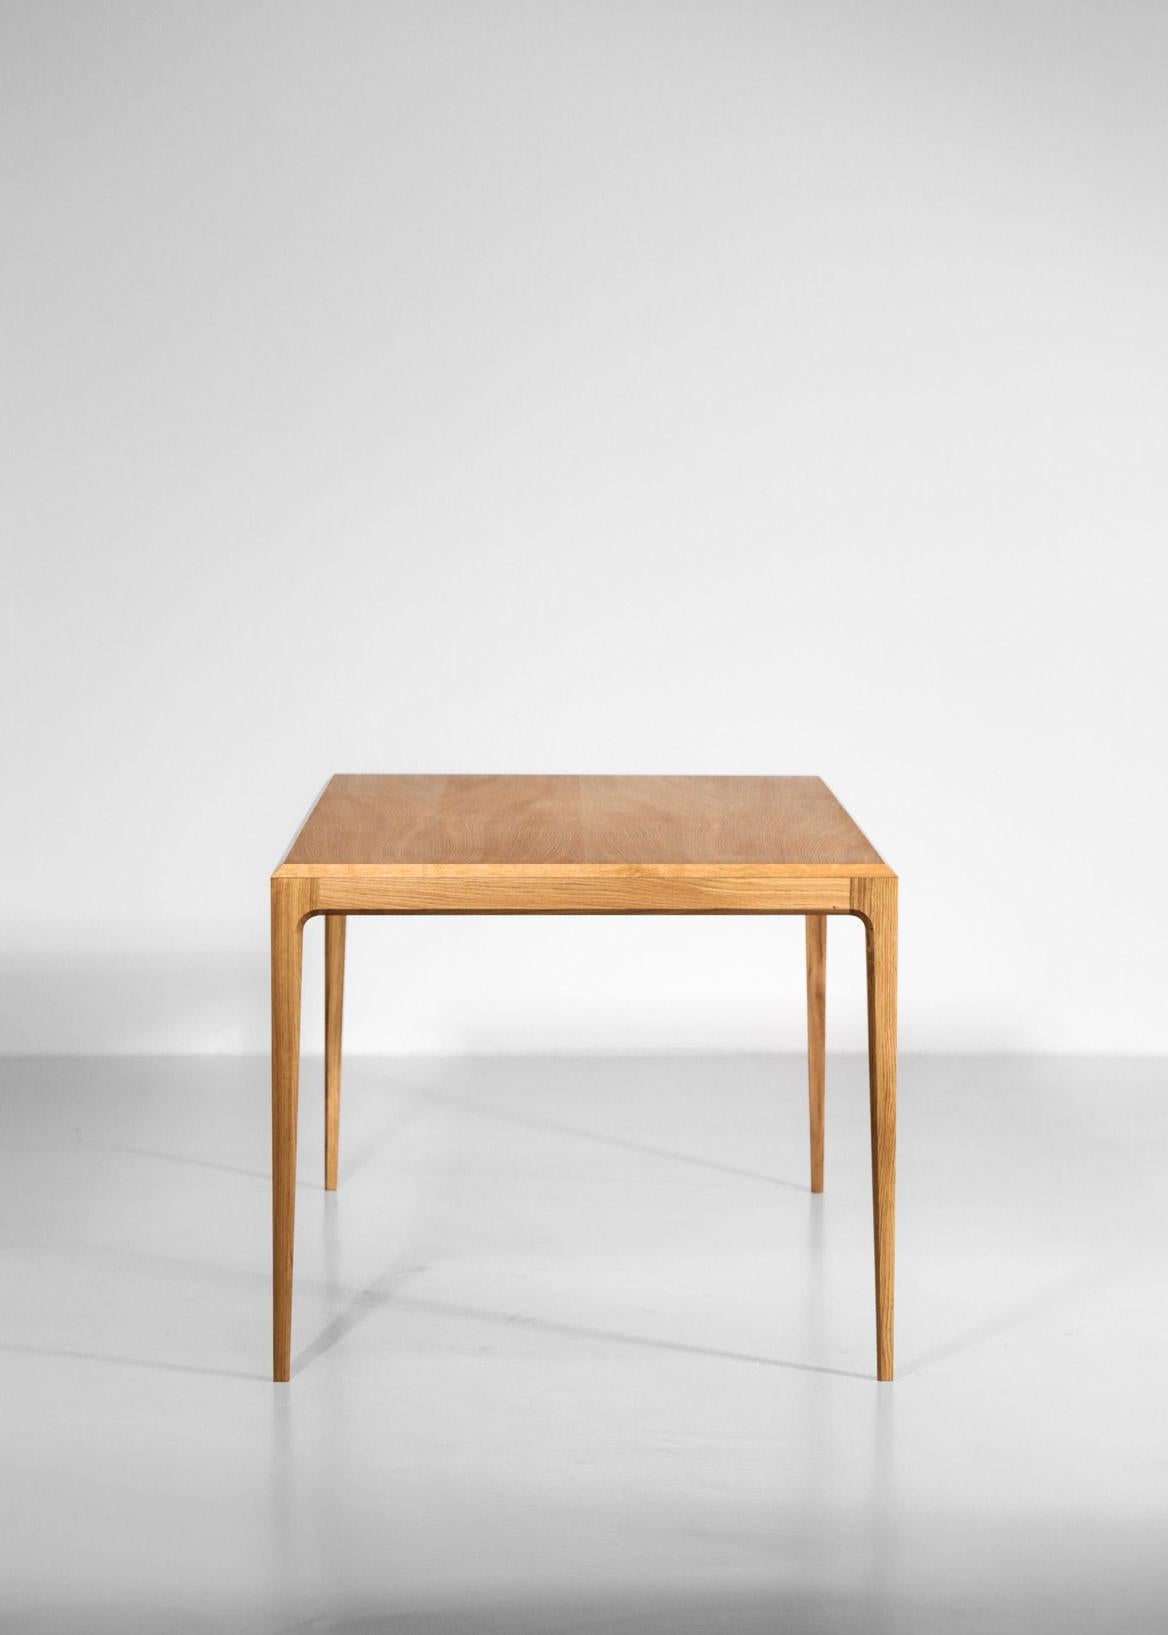 Contemporary Large Modern Table in Oak Scandinavian Design